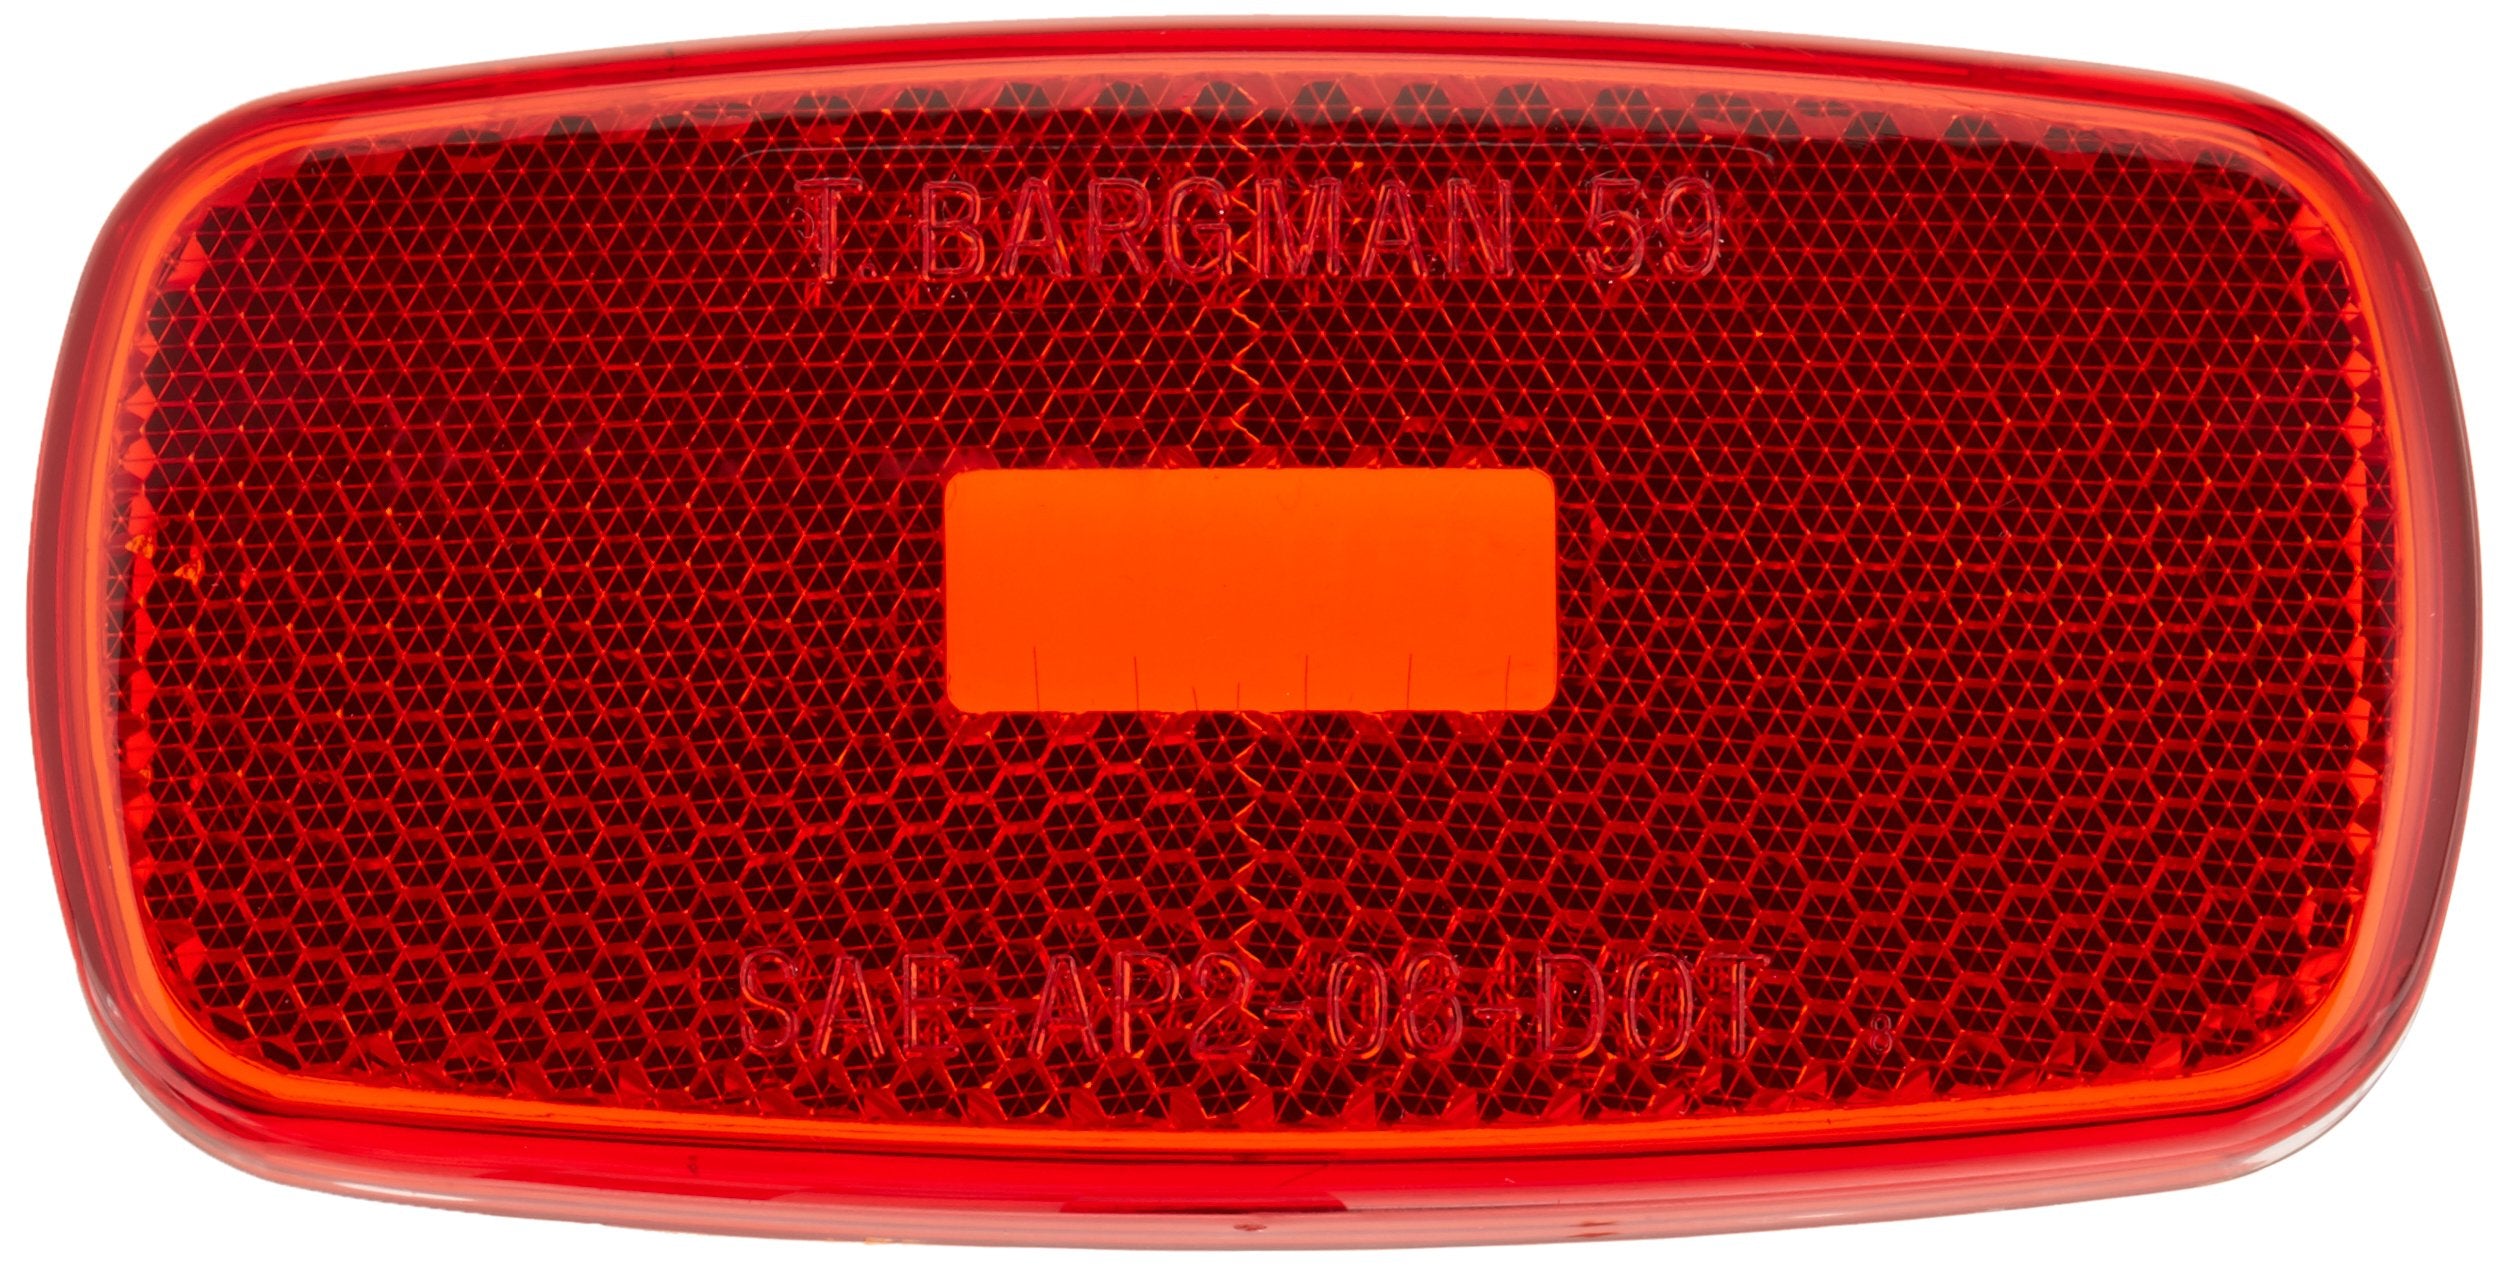 Bargman 31-59-010 Light #59-Red, Lens Only